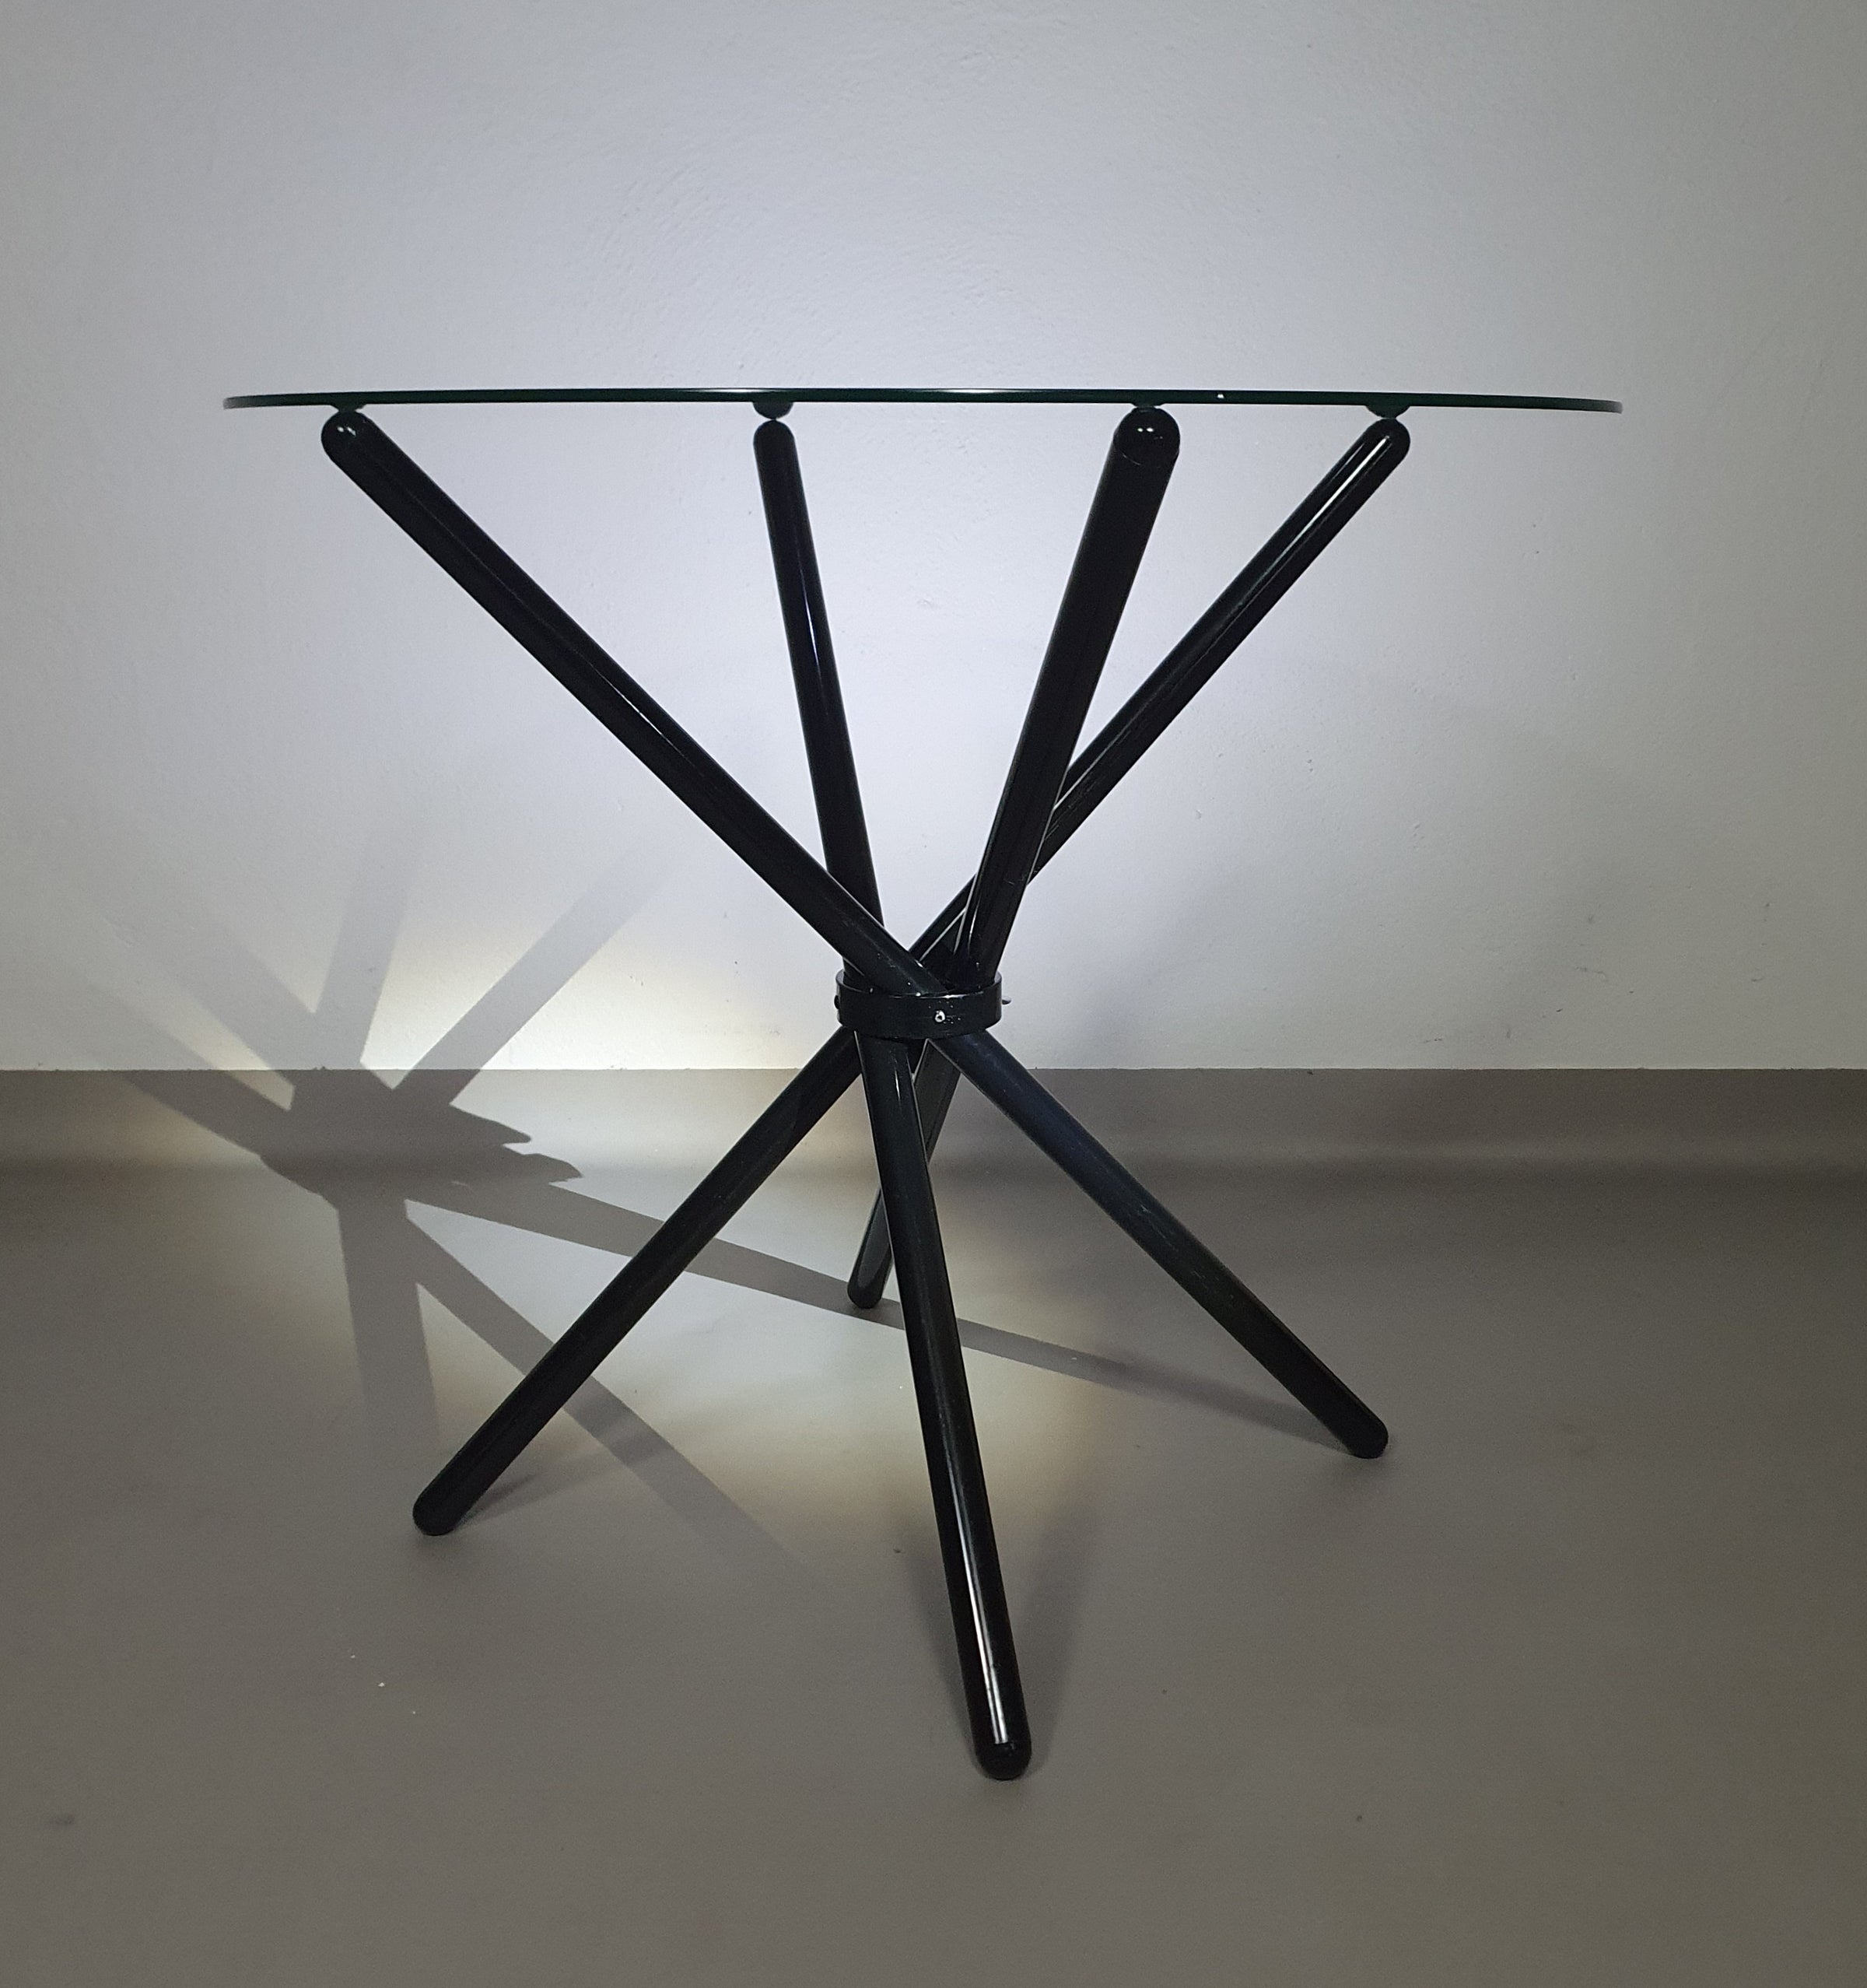 A thing of beauty is a joy for ever.
Italian folding table 80's
Aluminium frame